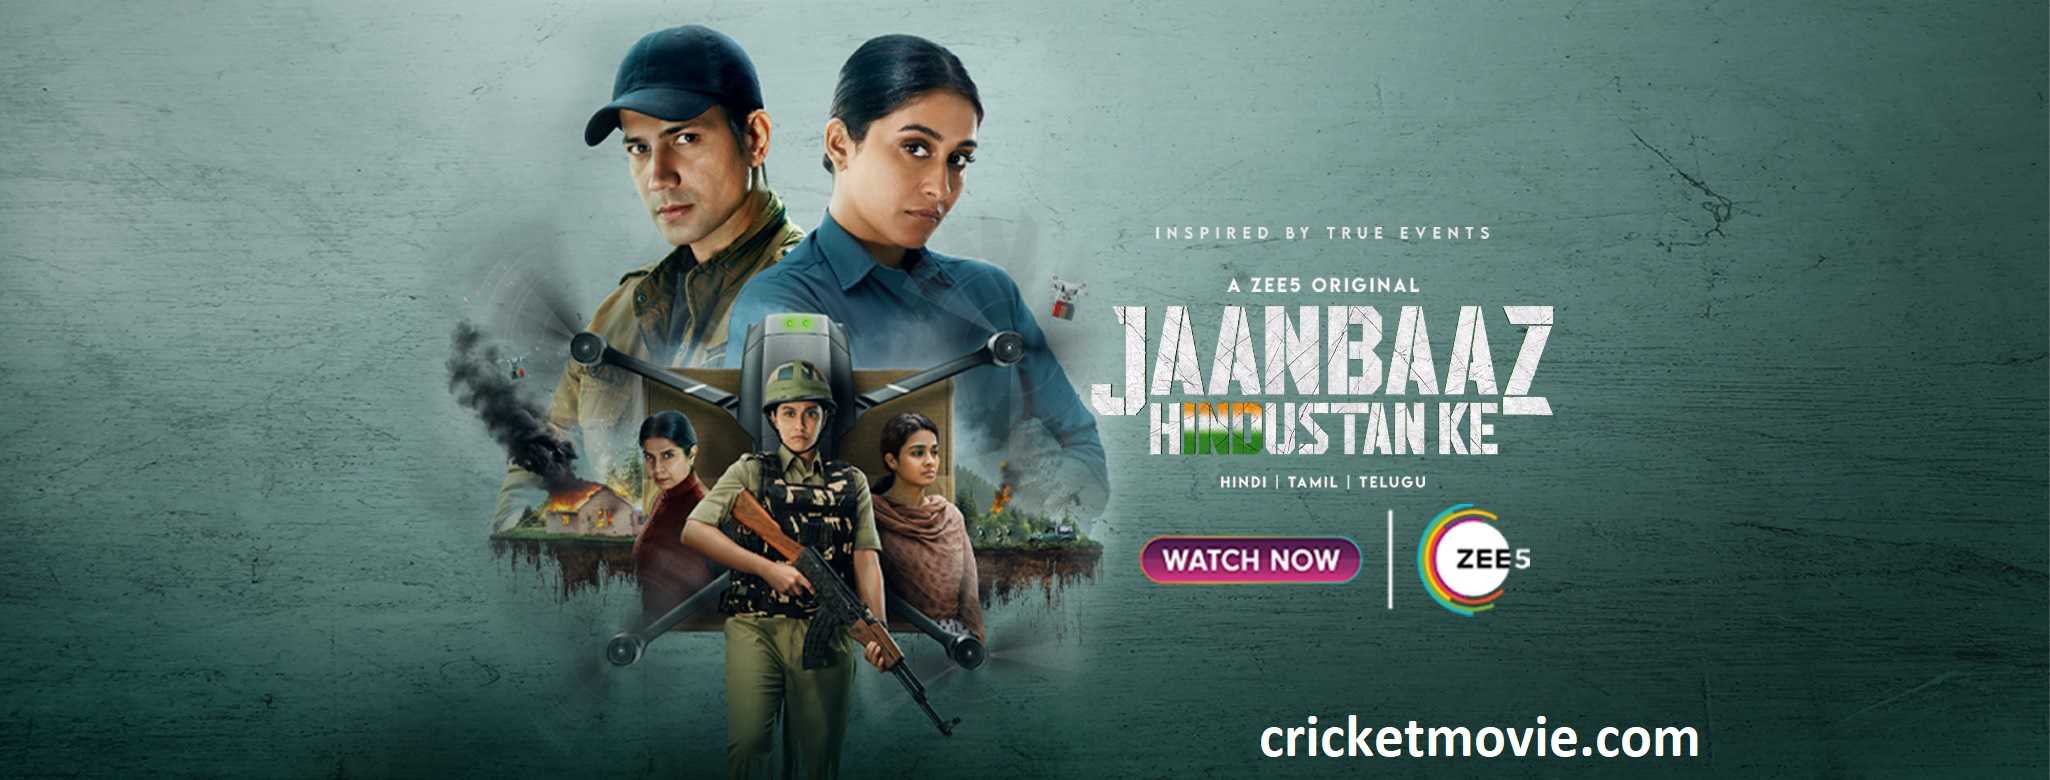 Janbaaz Hindustan Ke Review-cricketmovie.com